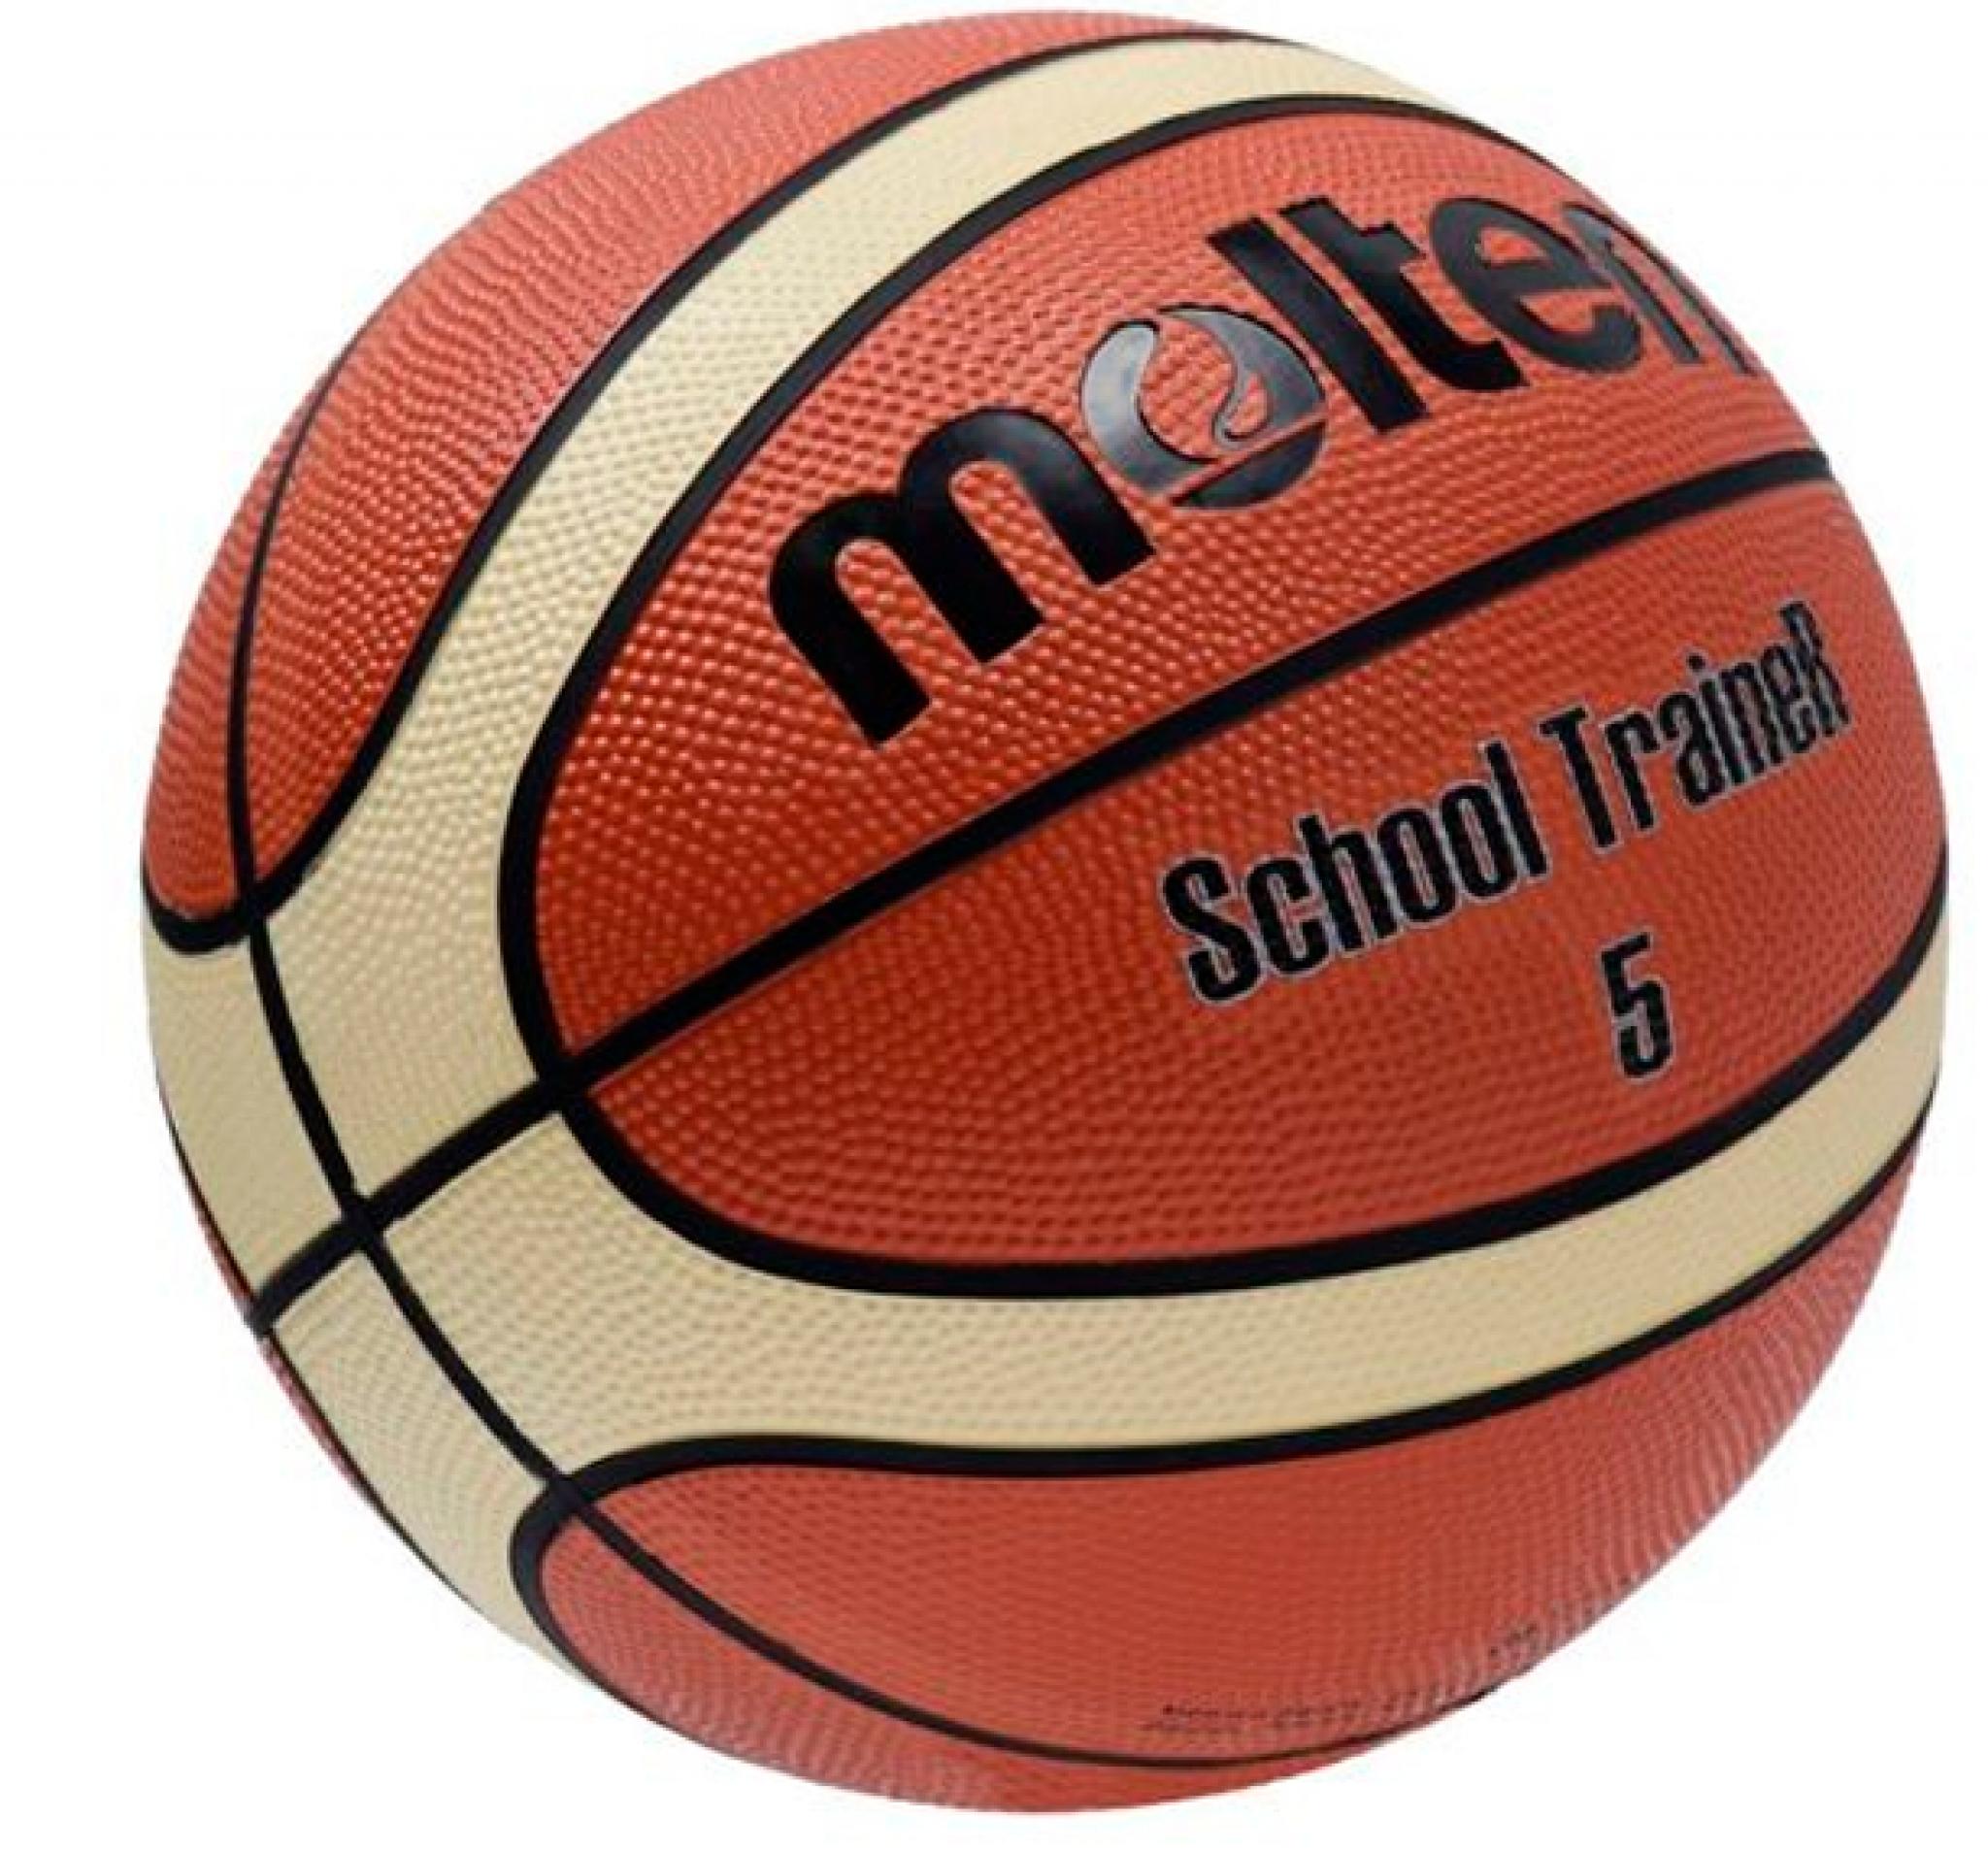 Баскетбольный мяч Molten G5-ST School Trainer